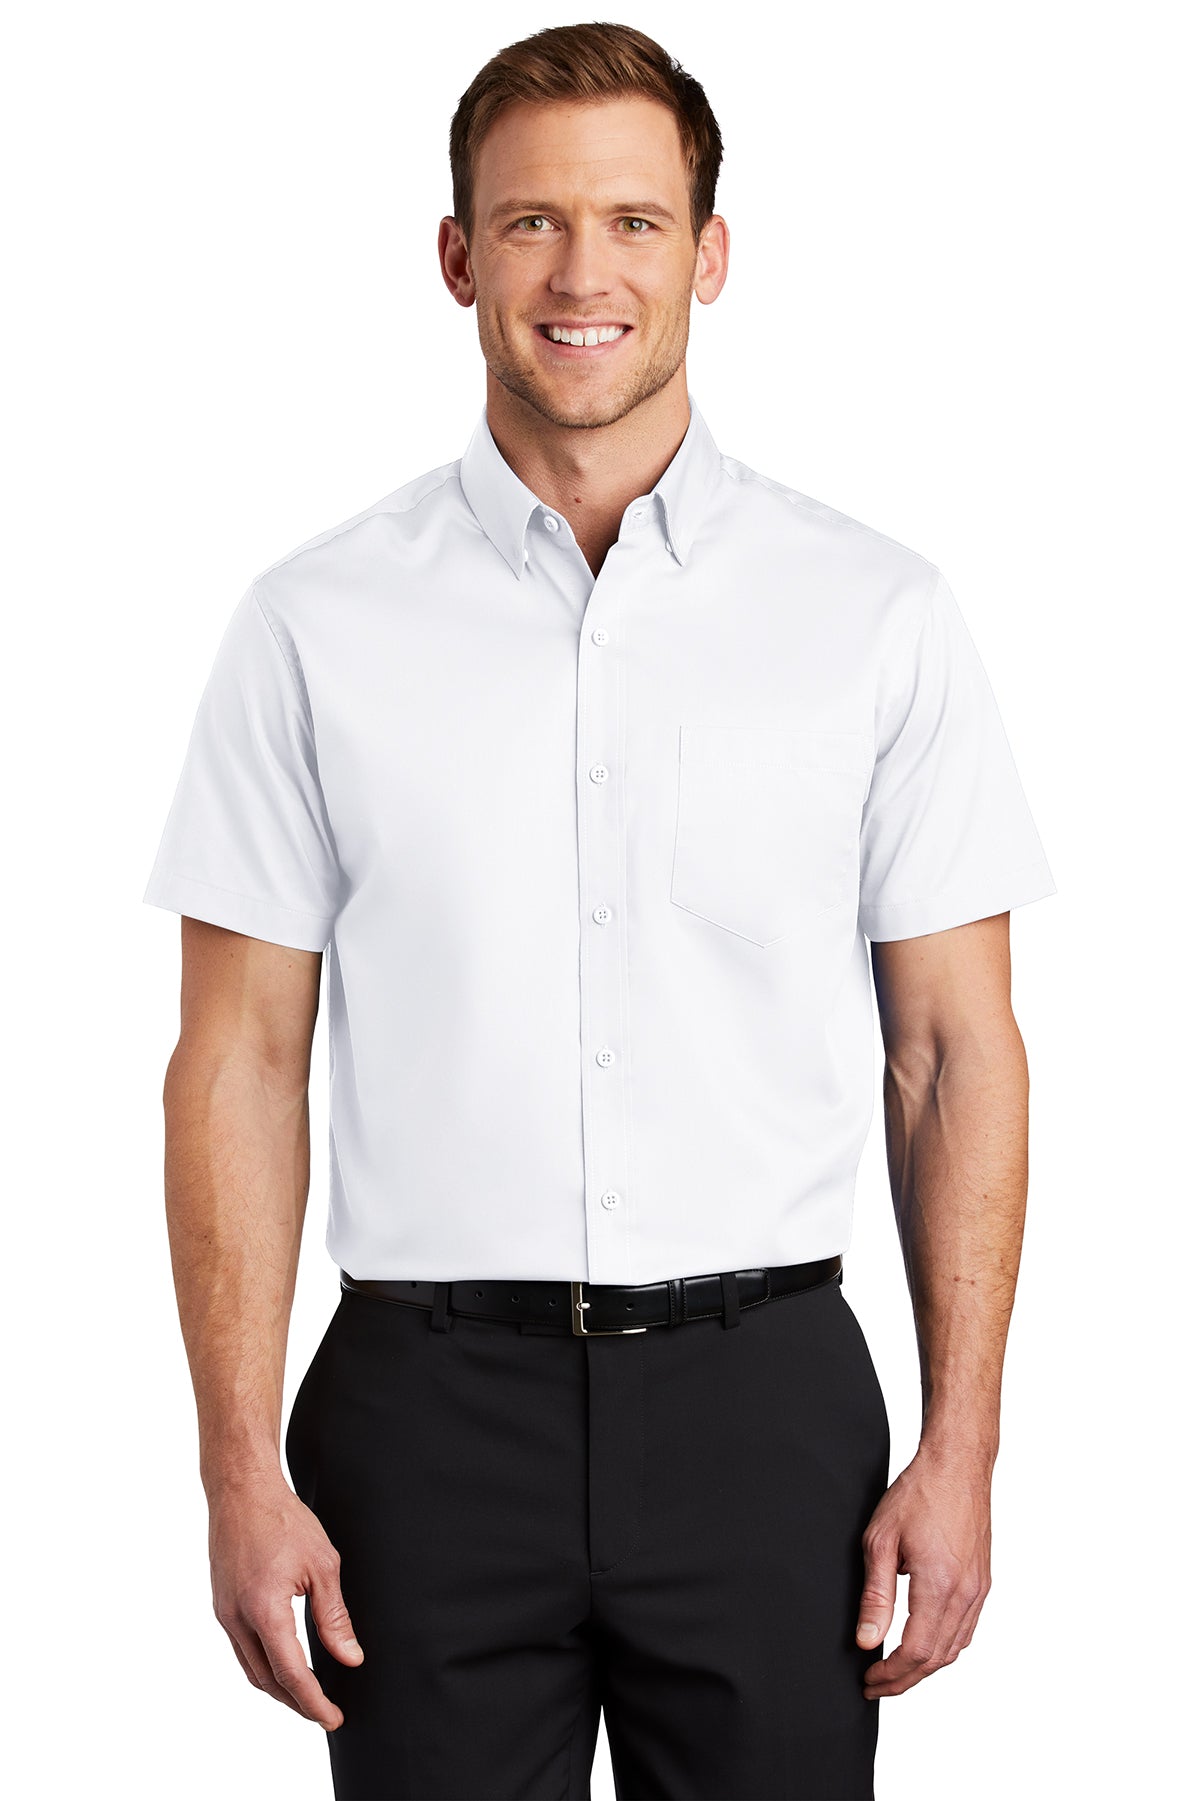 S664 Port Authority® Short Sleeve SuperPro™ Twill Shirt